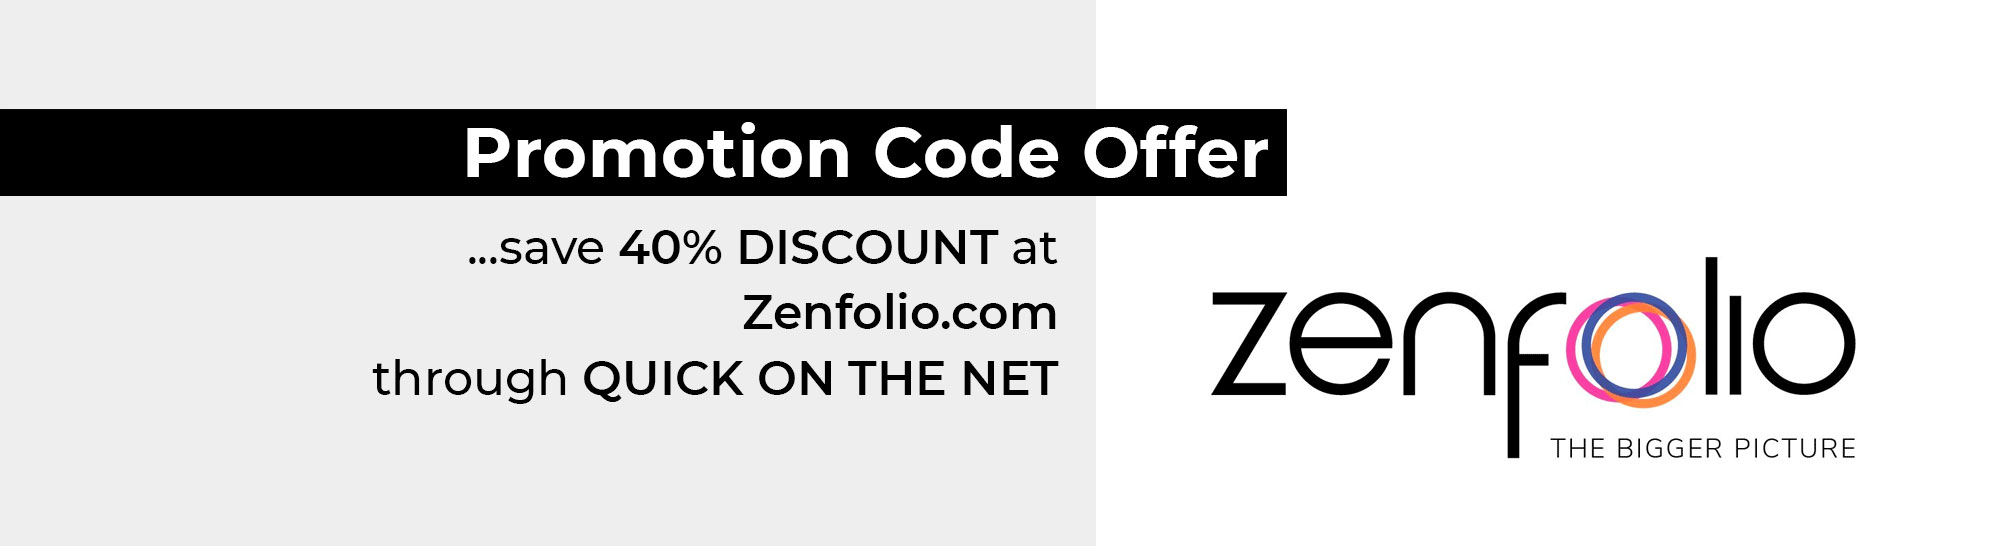 Zenfolio Promotion Code